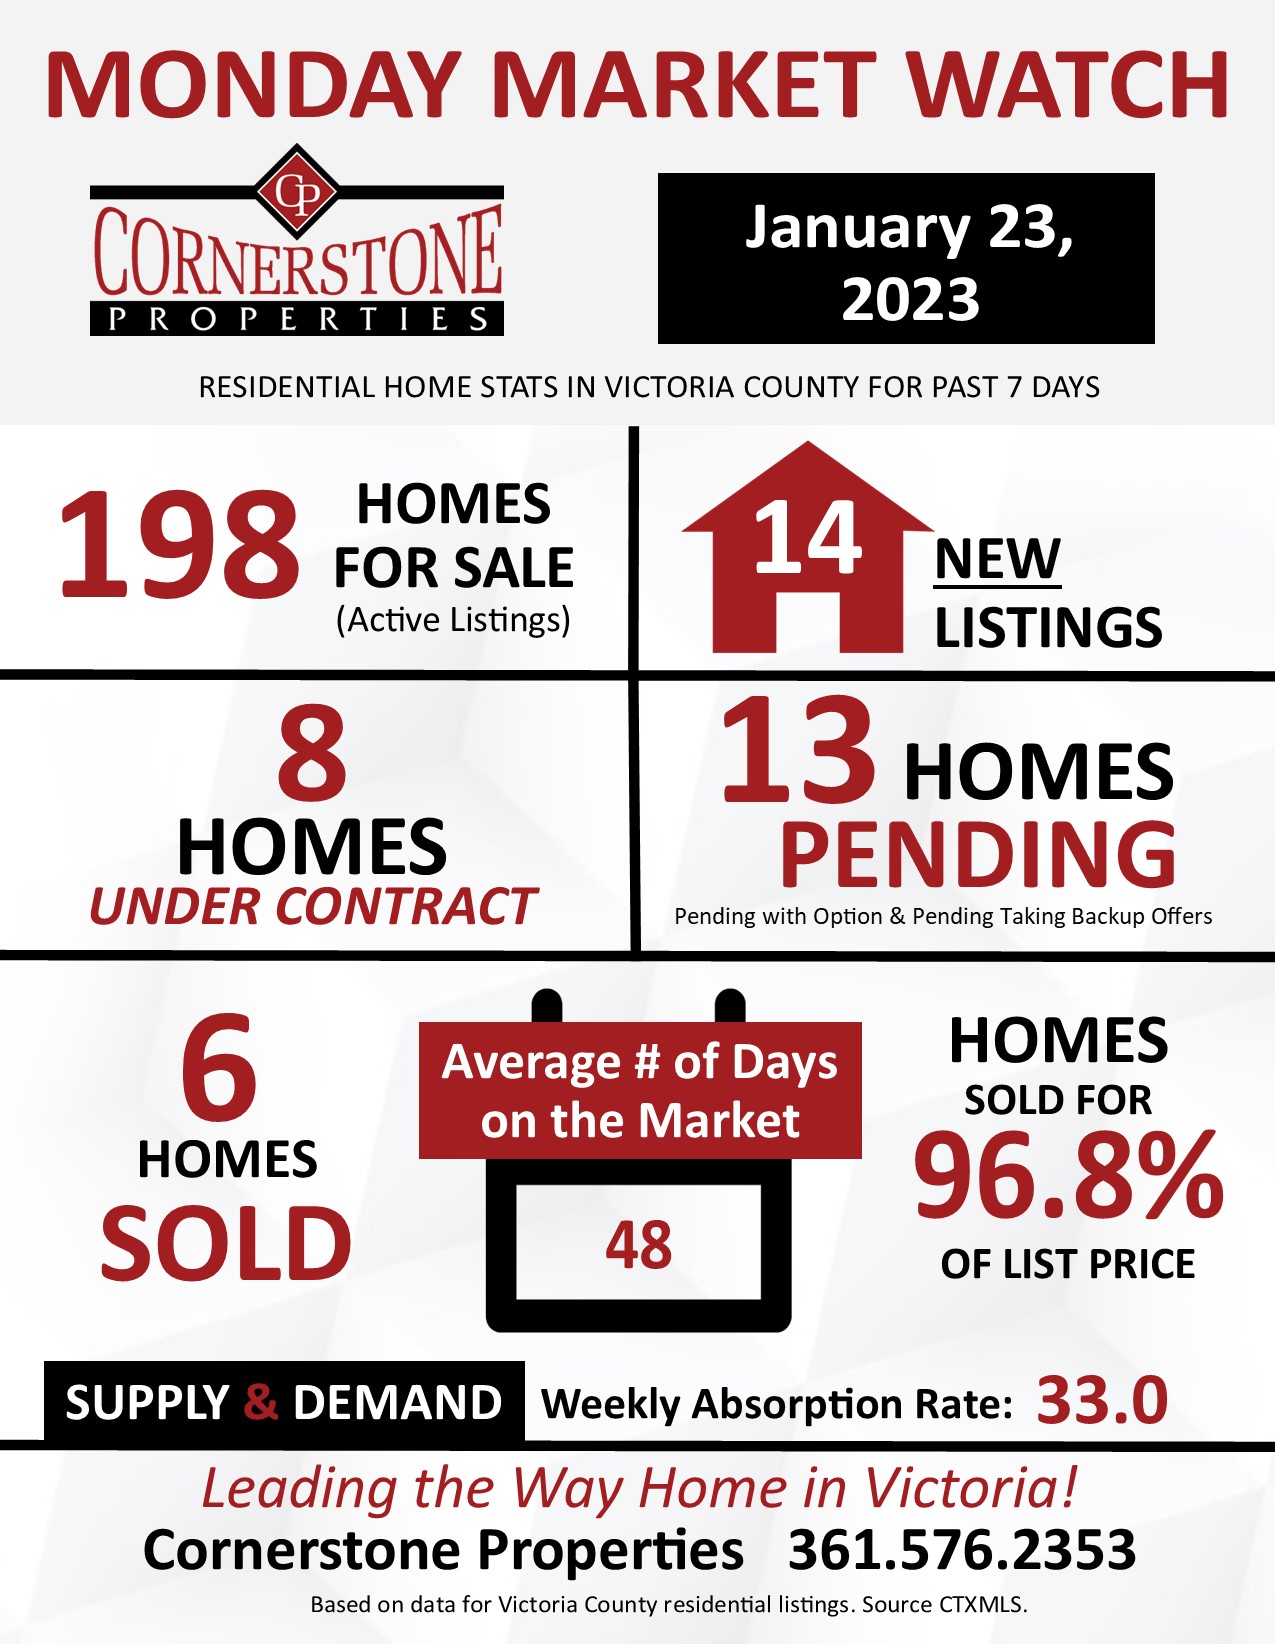 Monday Market Watch Home Sales in Victoria